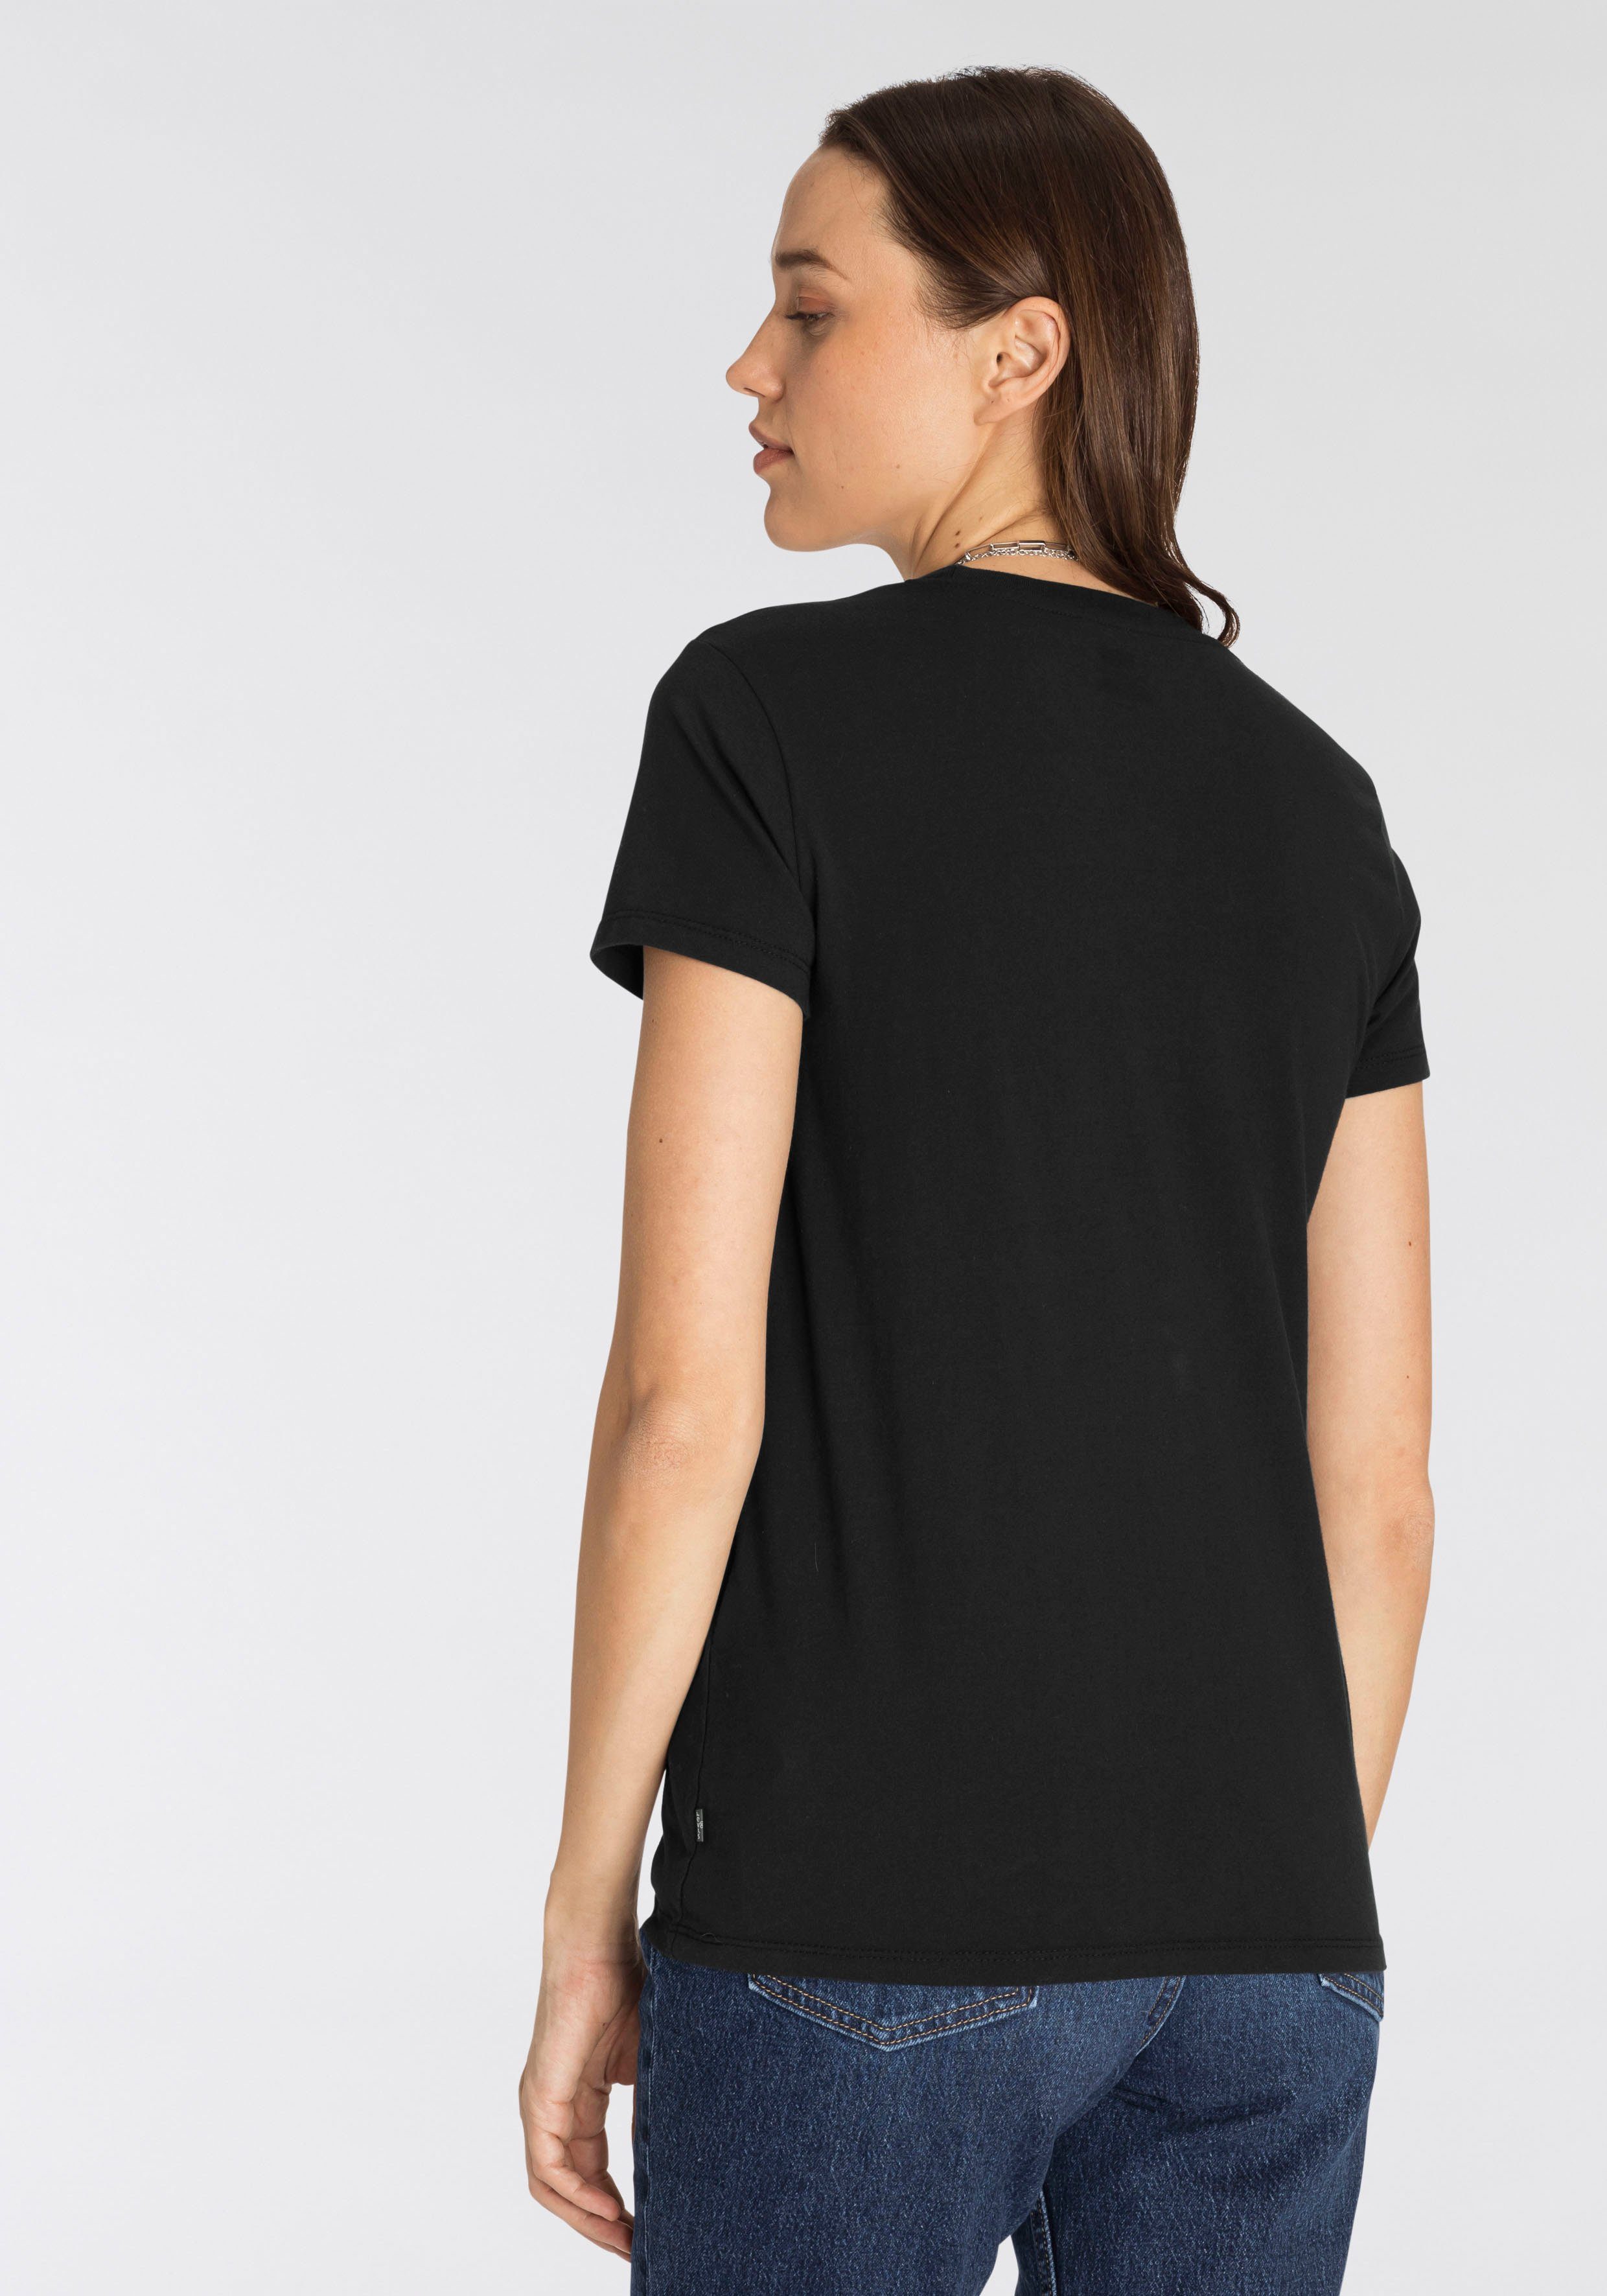 Levi's® schwarz THE PERFECT Mit Markenschriftzug T-Shirt TEE